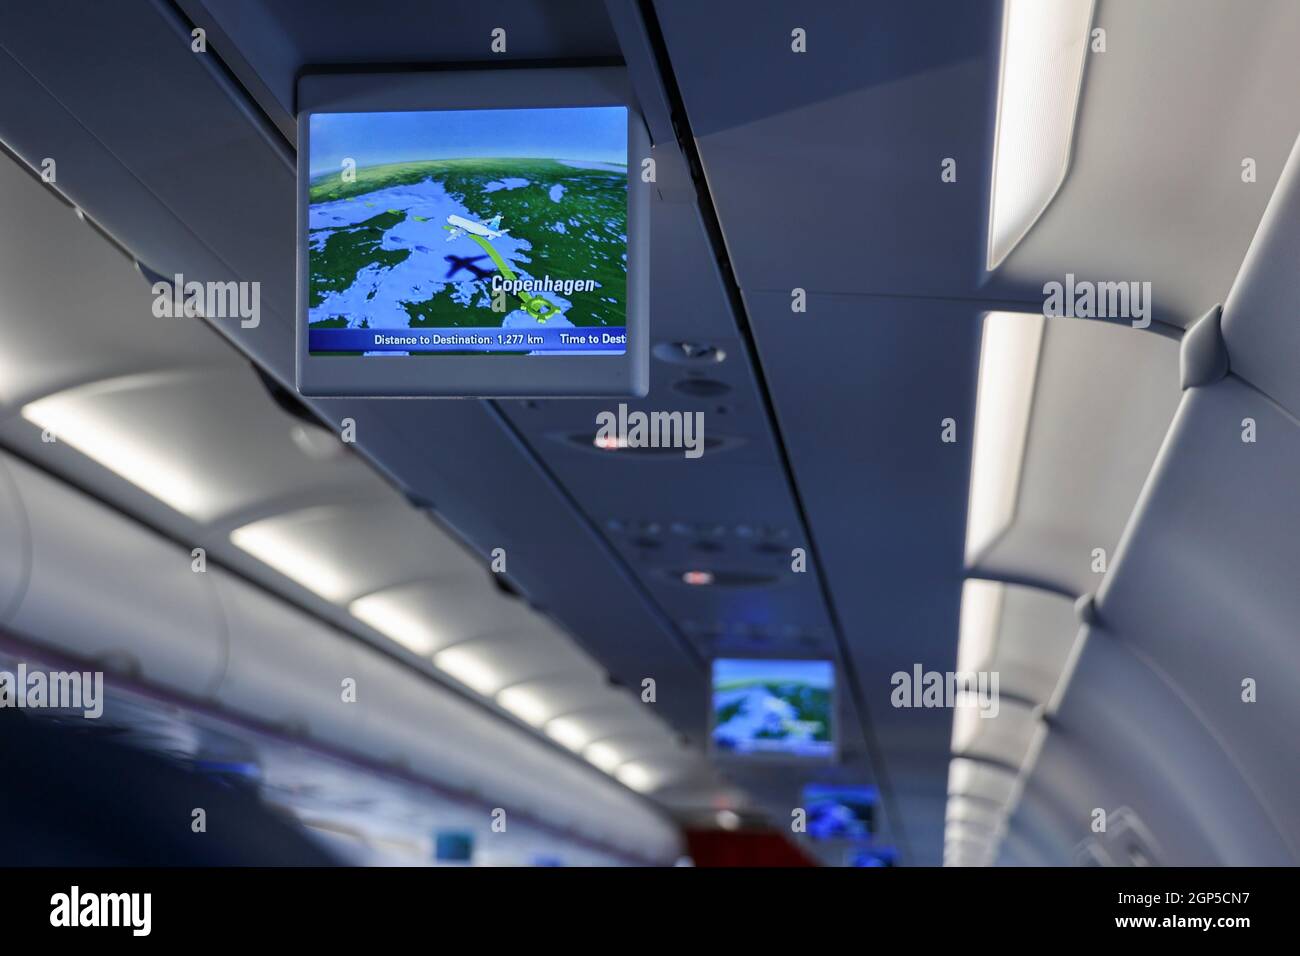 Monitor inside an air plane cabin showing aircraft flight position map on TV screen after departure from Copenhagen Airport Kastrup, Copenhagen, Denma Stock Photo